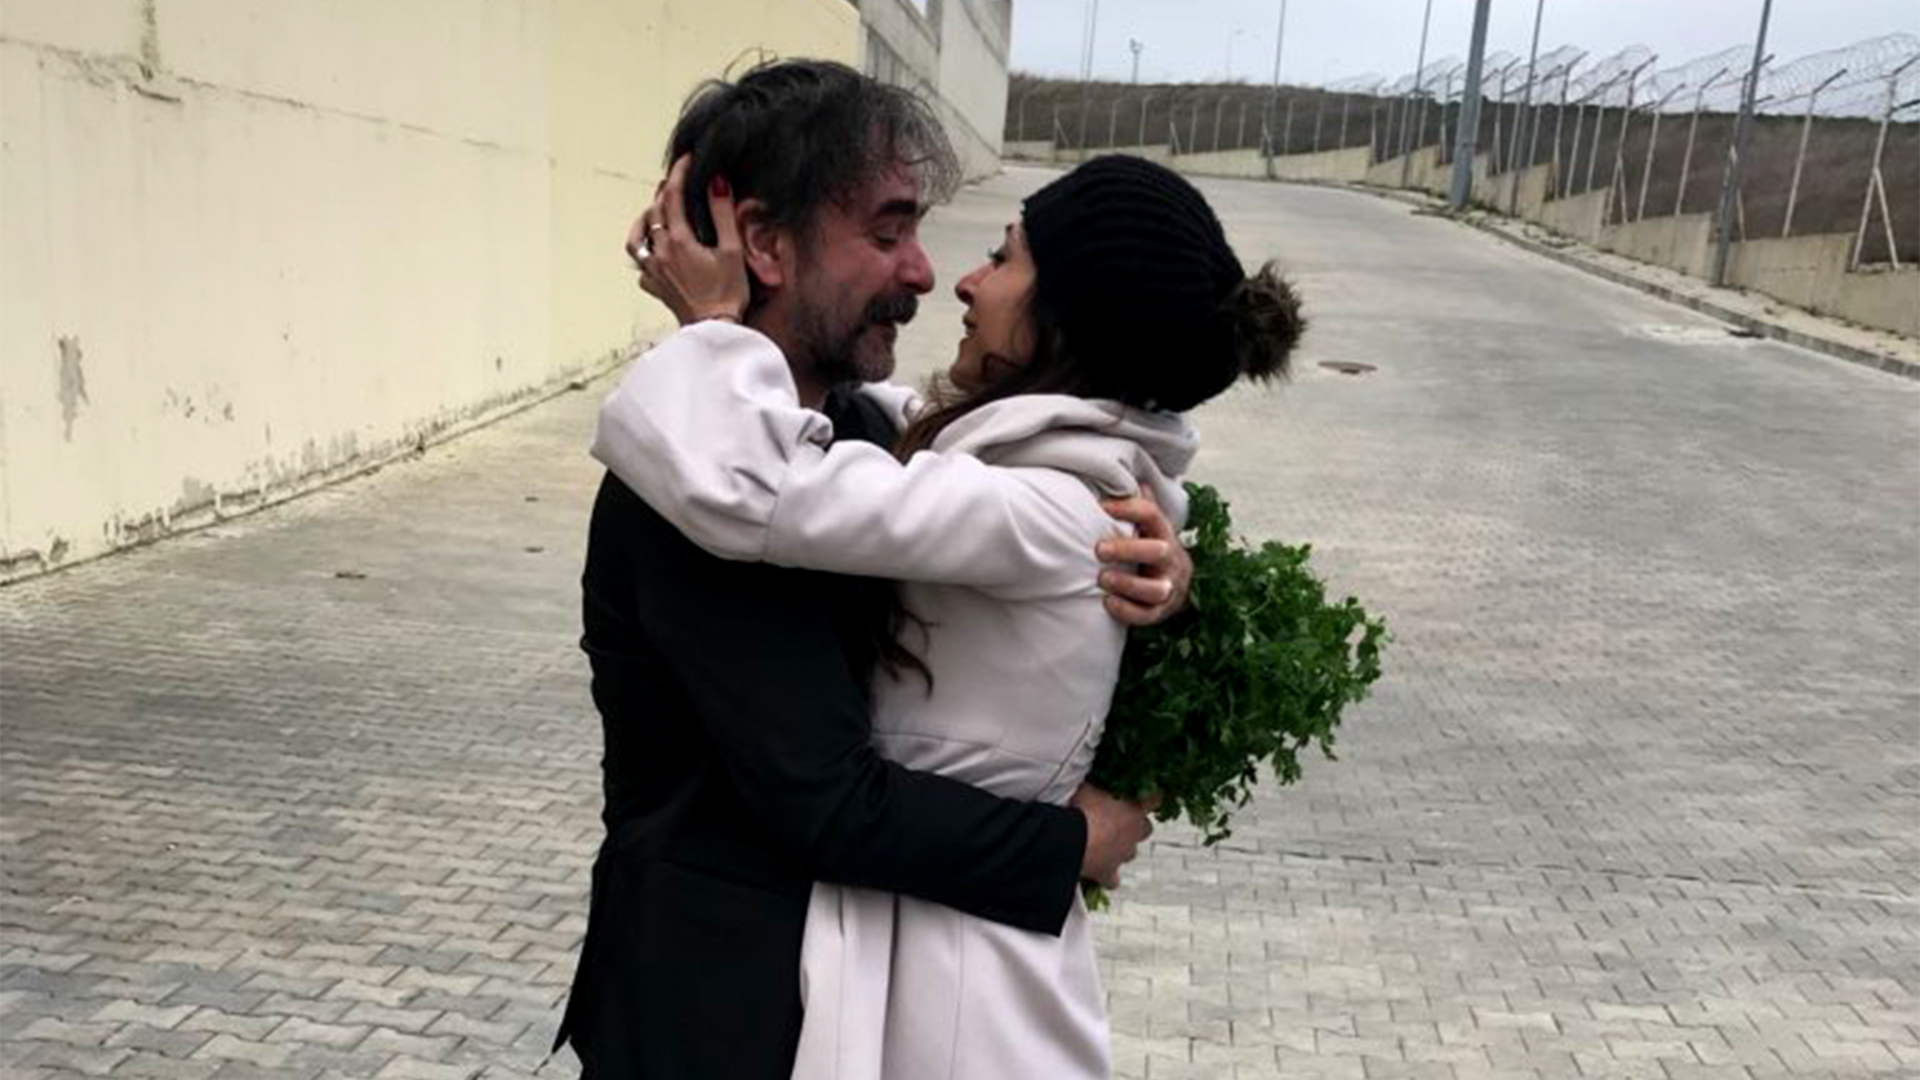 Deniz Yücel umarmt seine Frau.